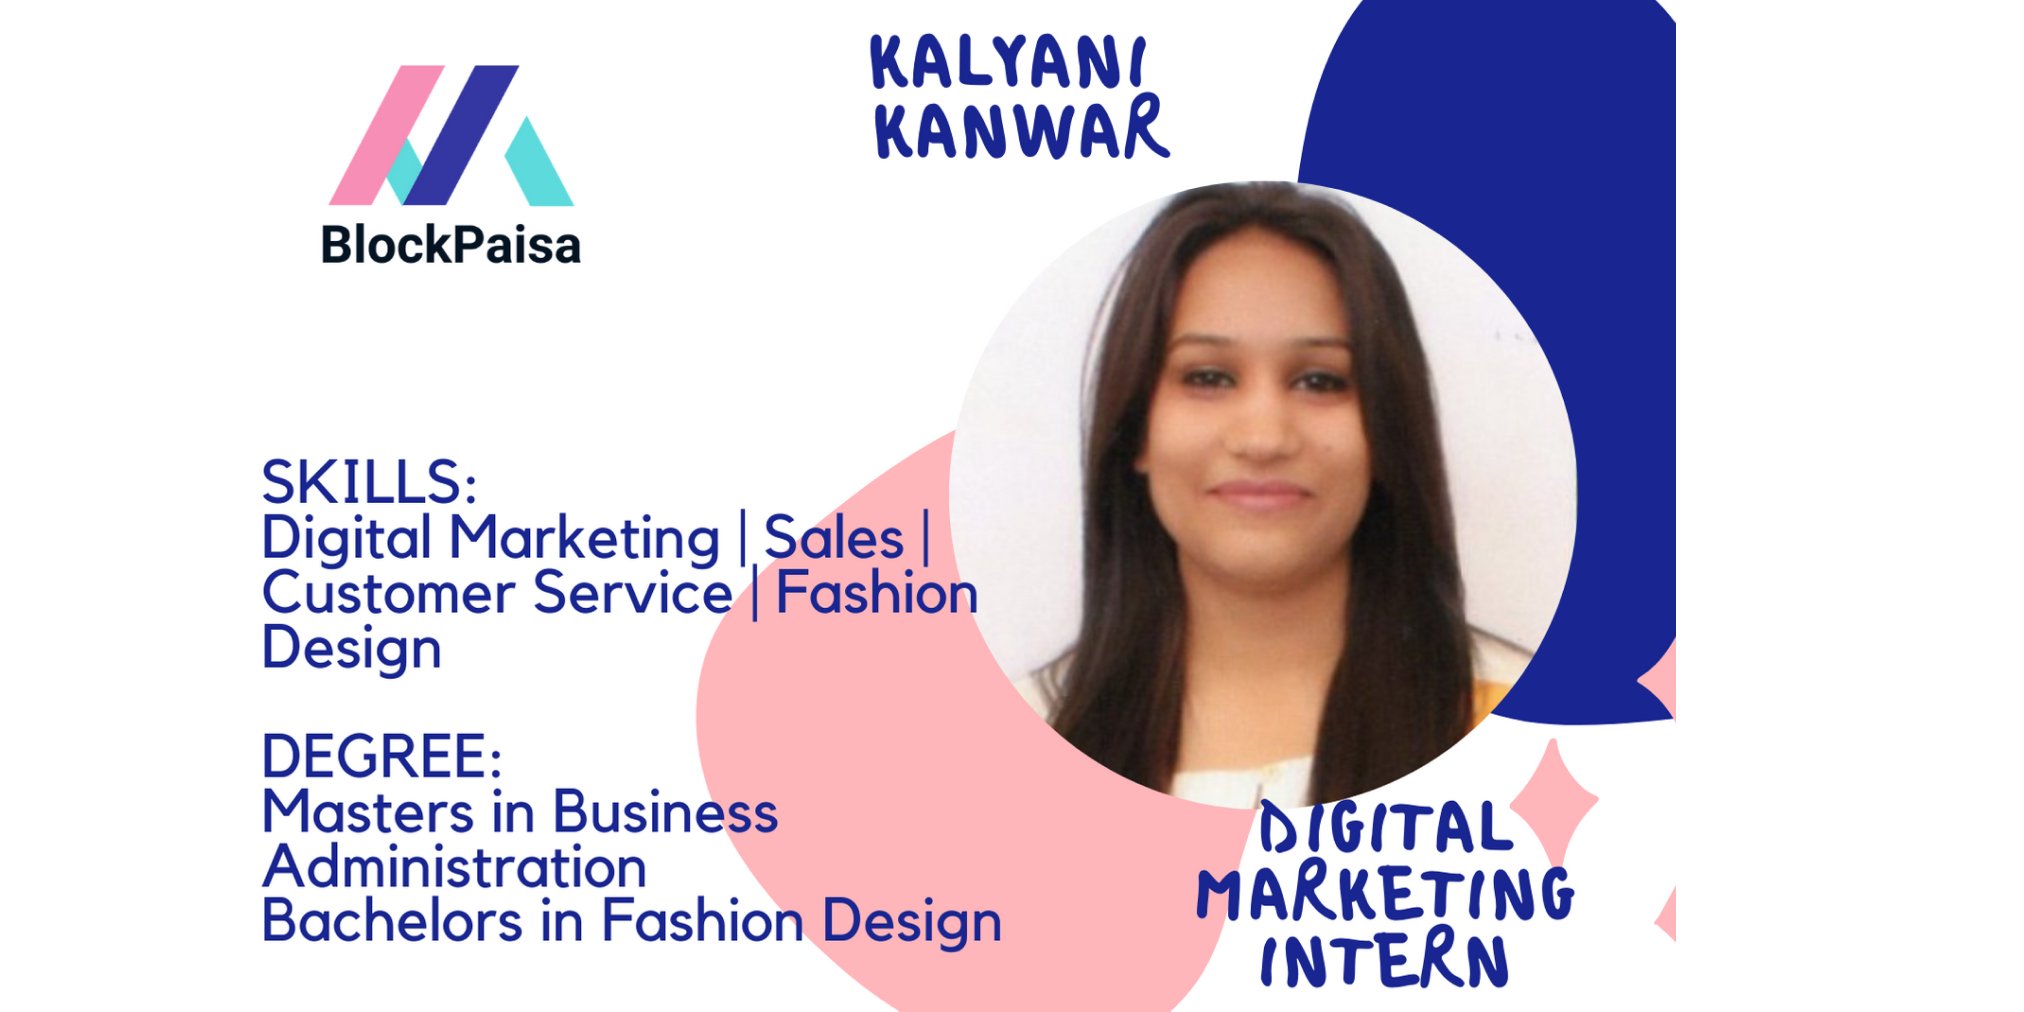 BlockPaisa on X: Today we are highlighting Kalyani Kanwar who is